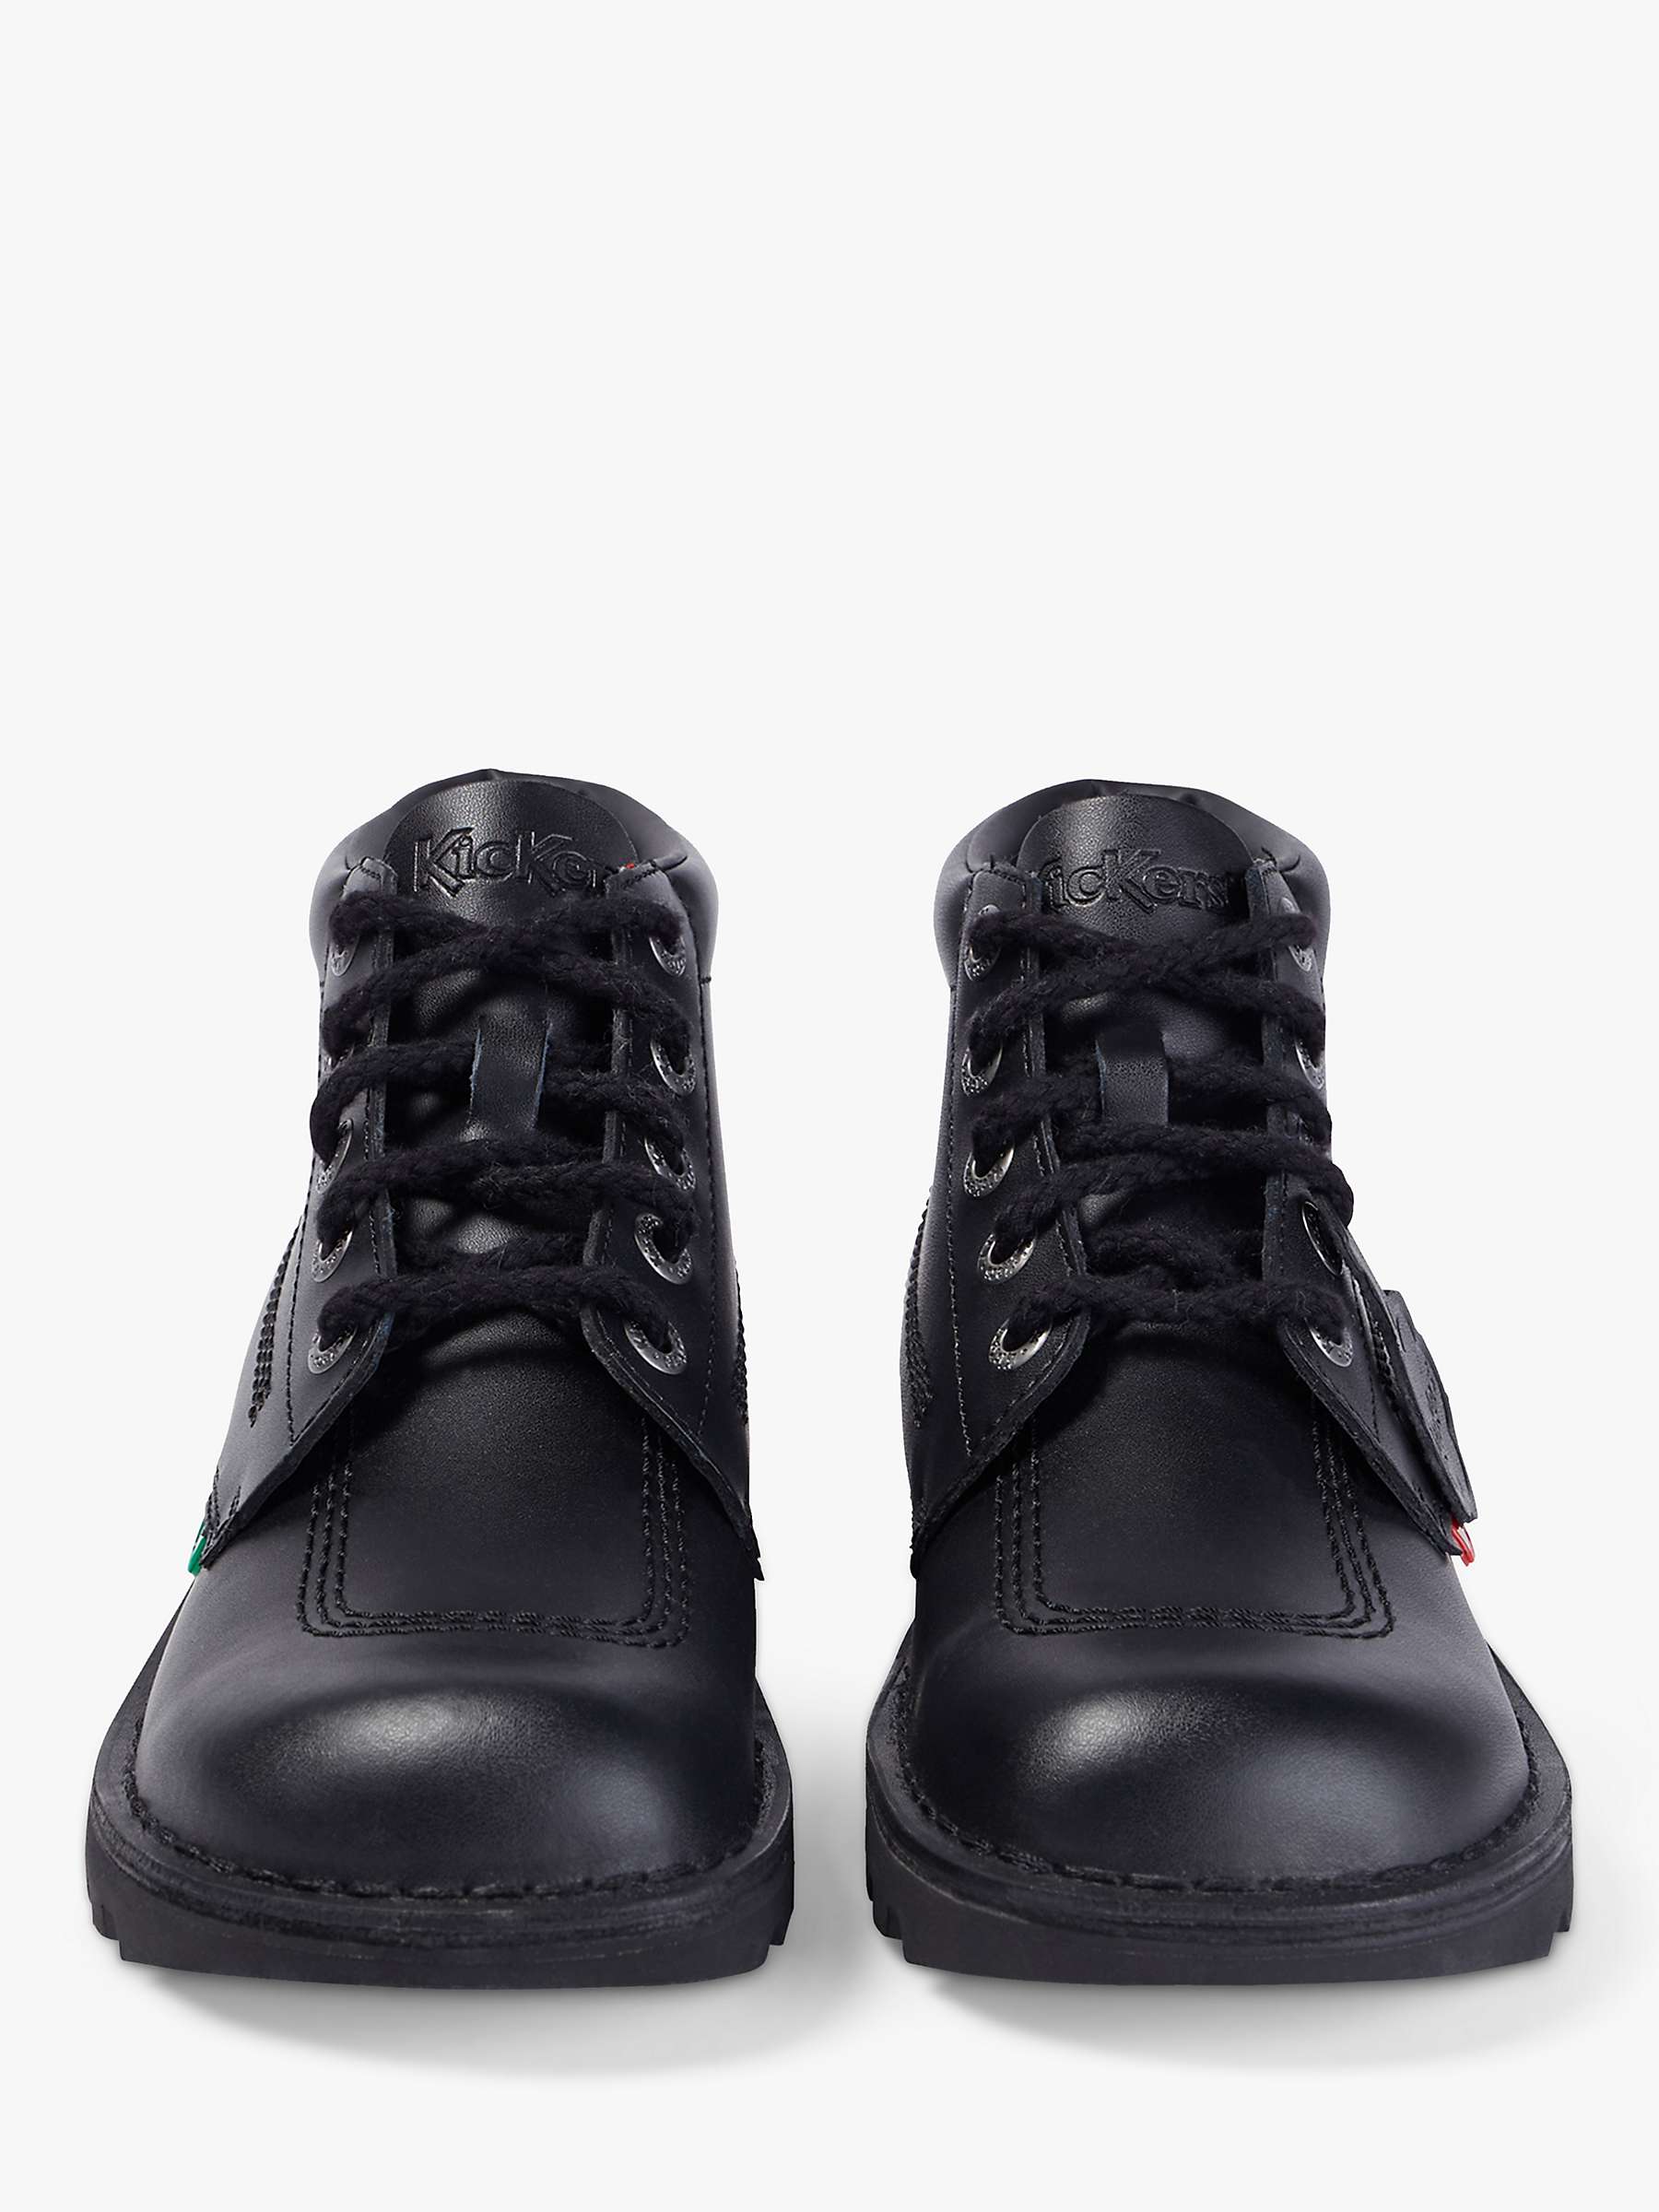 Buy Kickers Kick Hi Leather Boots, Black Online at johnlewis.com